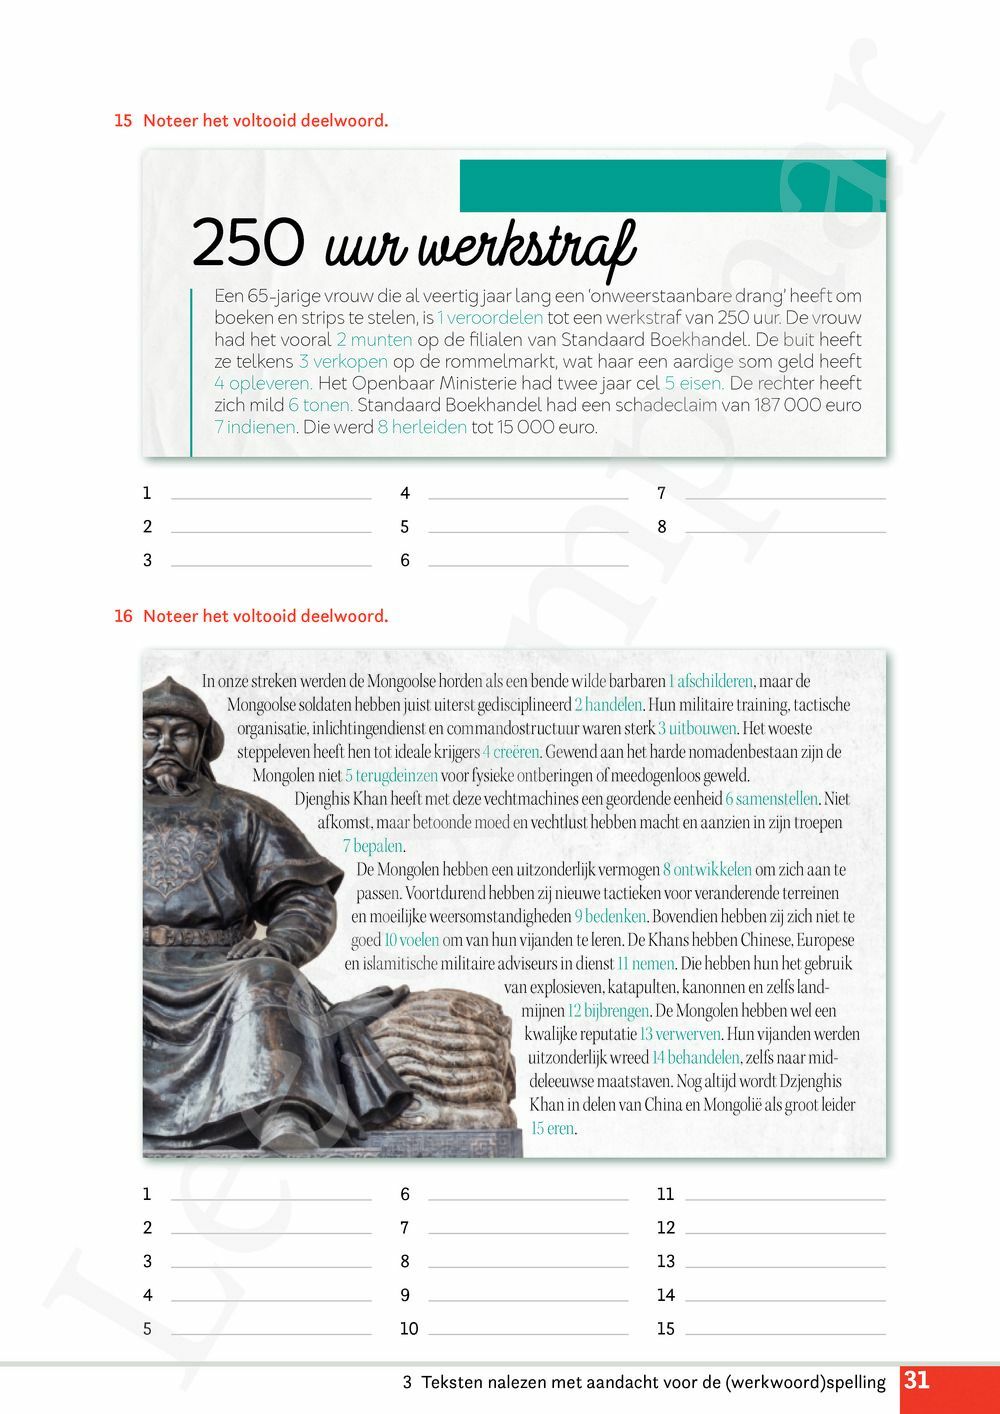 Preview: Campus Nederlands 2 Leerwerkboek Plus (incl. Pelckmans Portaal)